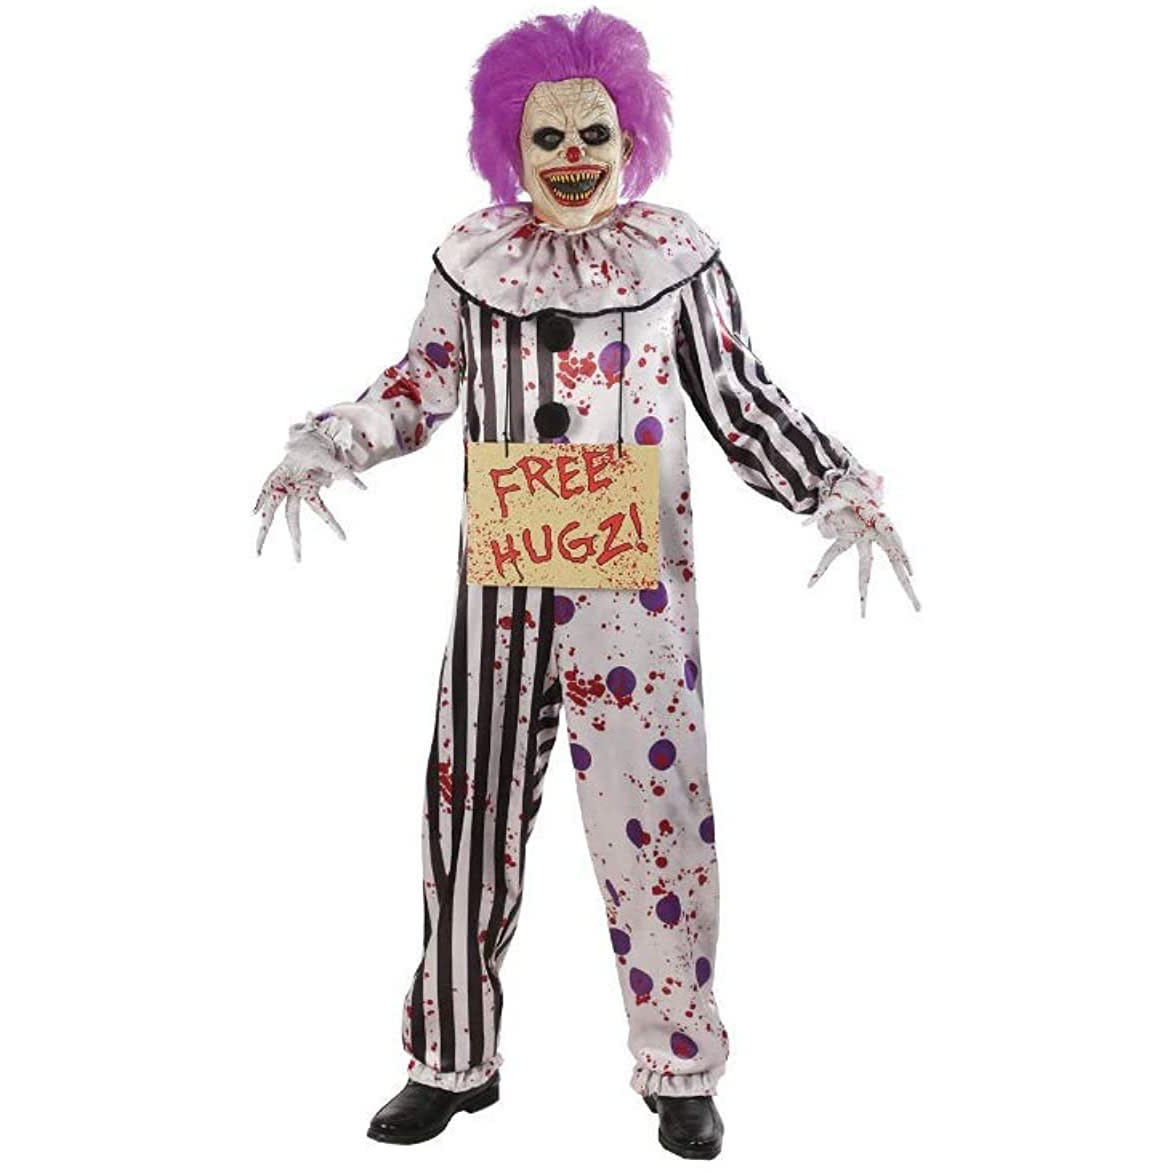 Hugz The Clown Costume